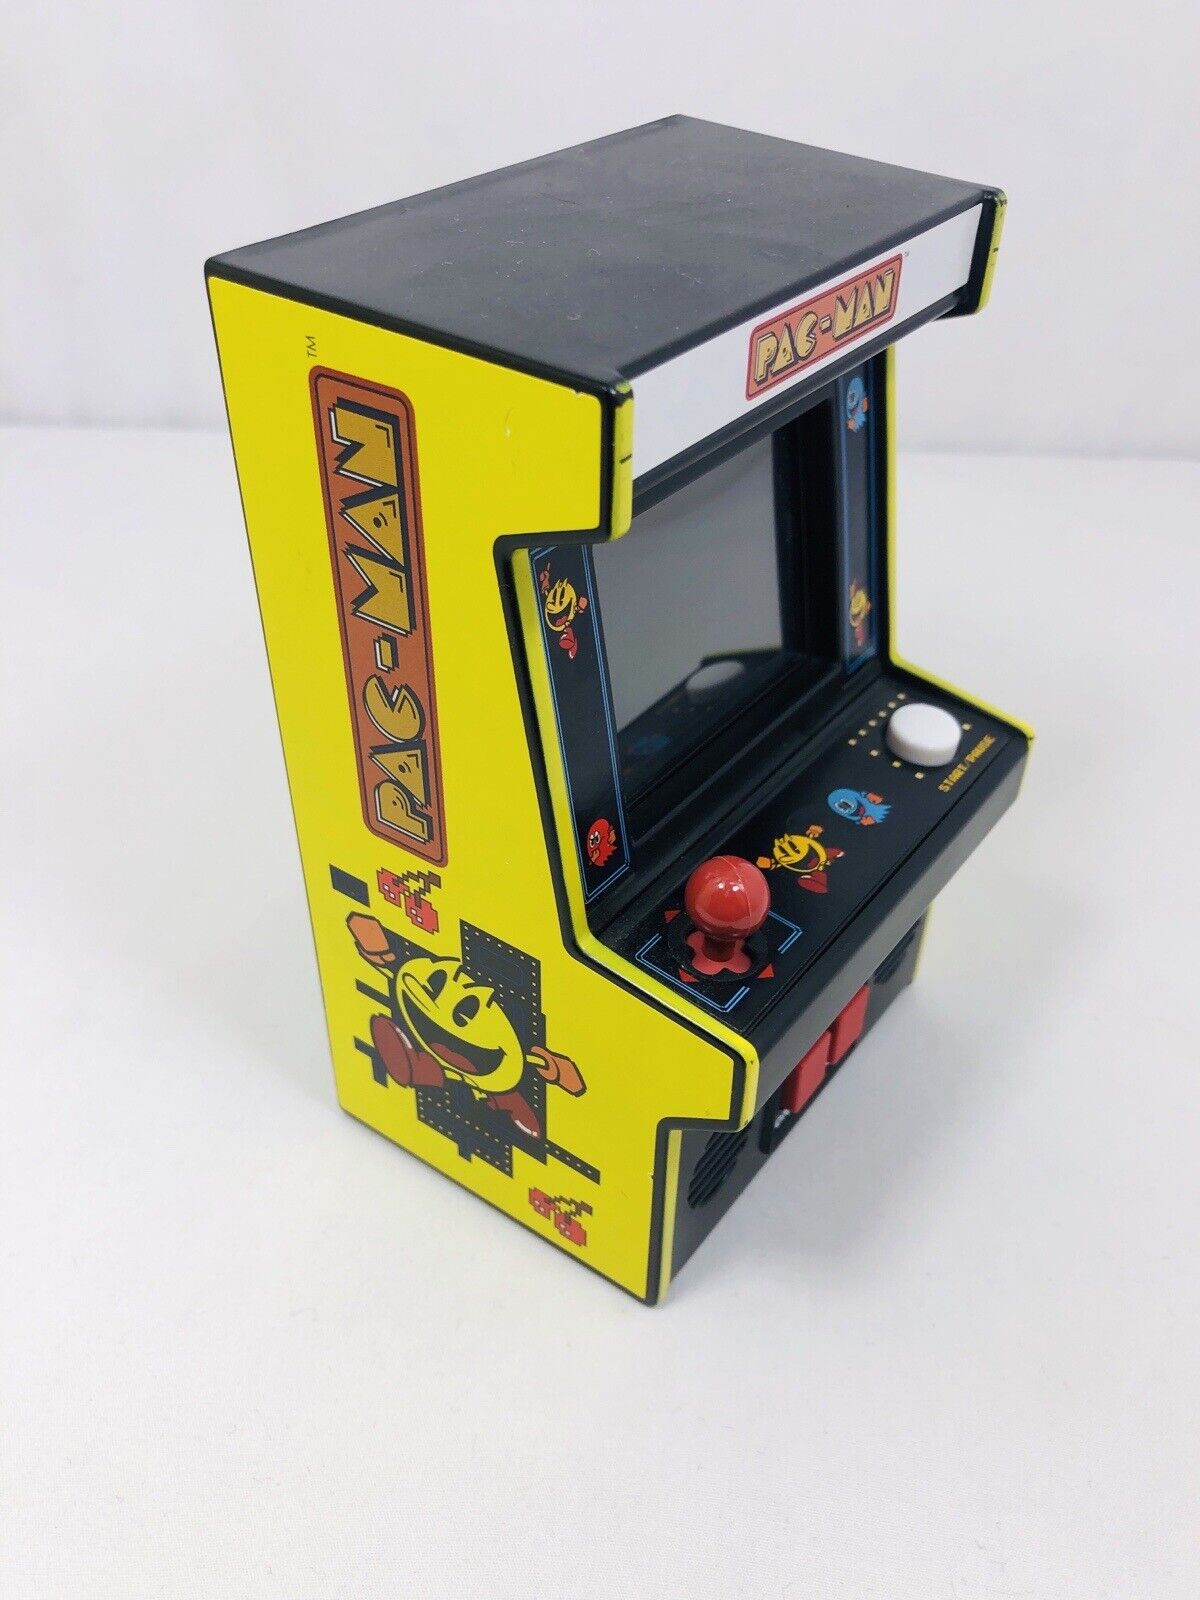 Pac-Man 2019 Retro Mini Arcade Machine Bandai Namco #09545 Tested Works 